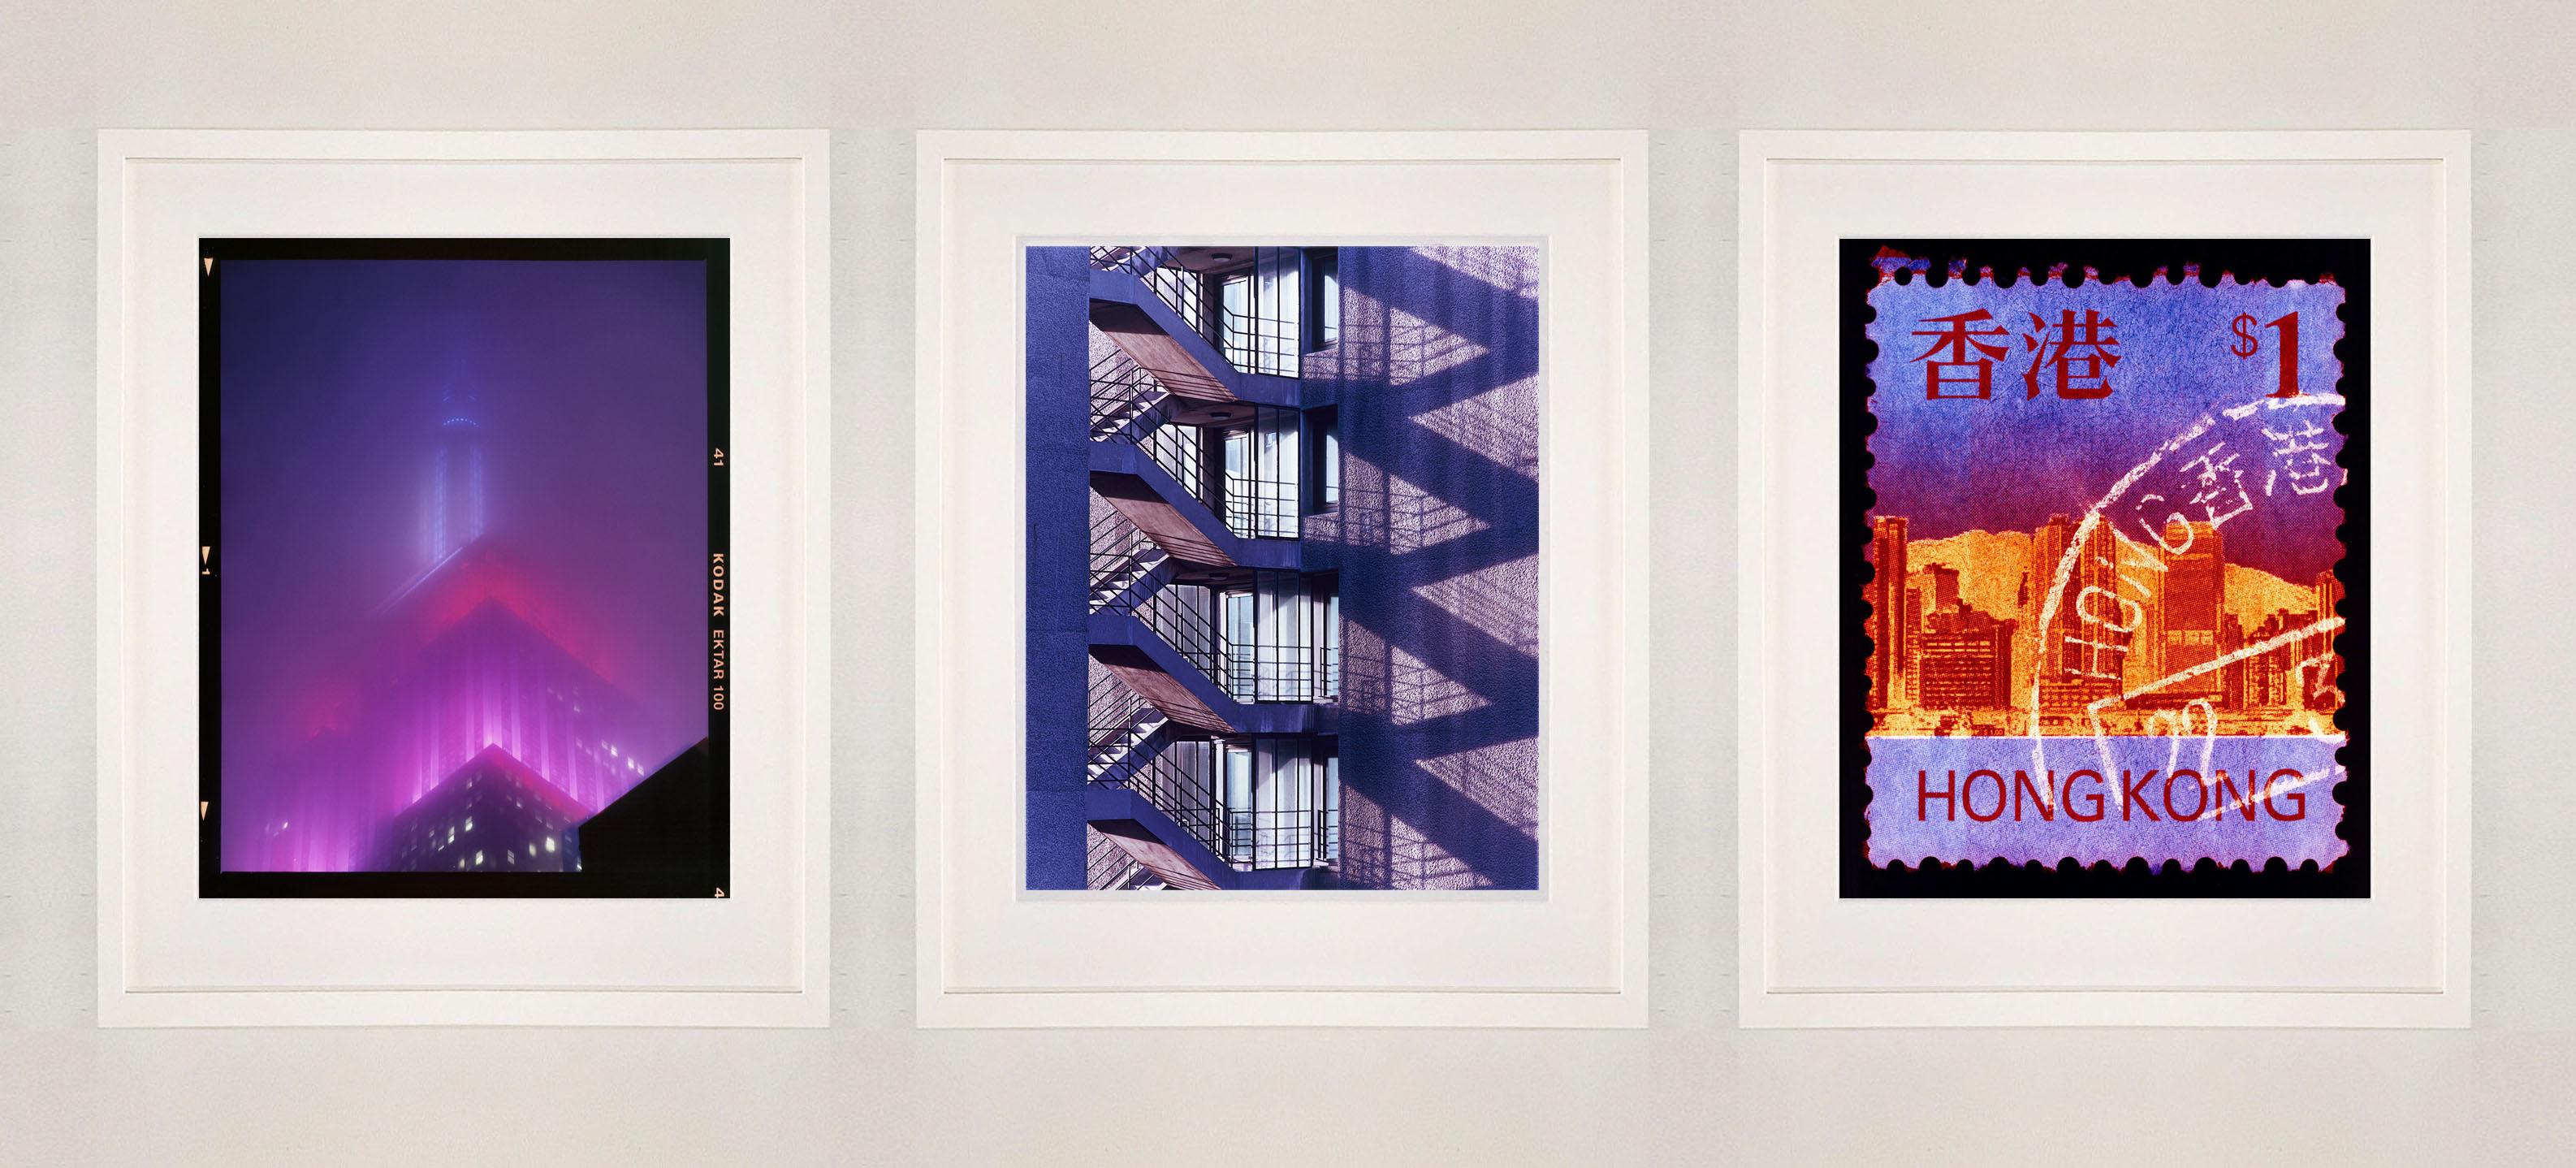 New York, London, Hong Kong Set of Three Framed Purple Photographic Artworks - Print by Richard Heeps